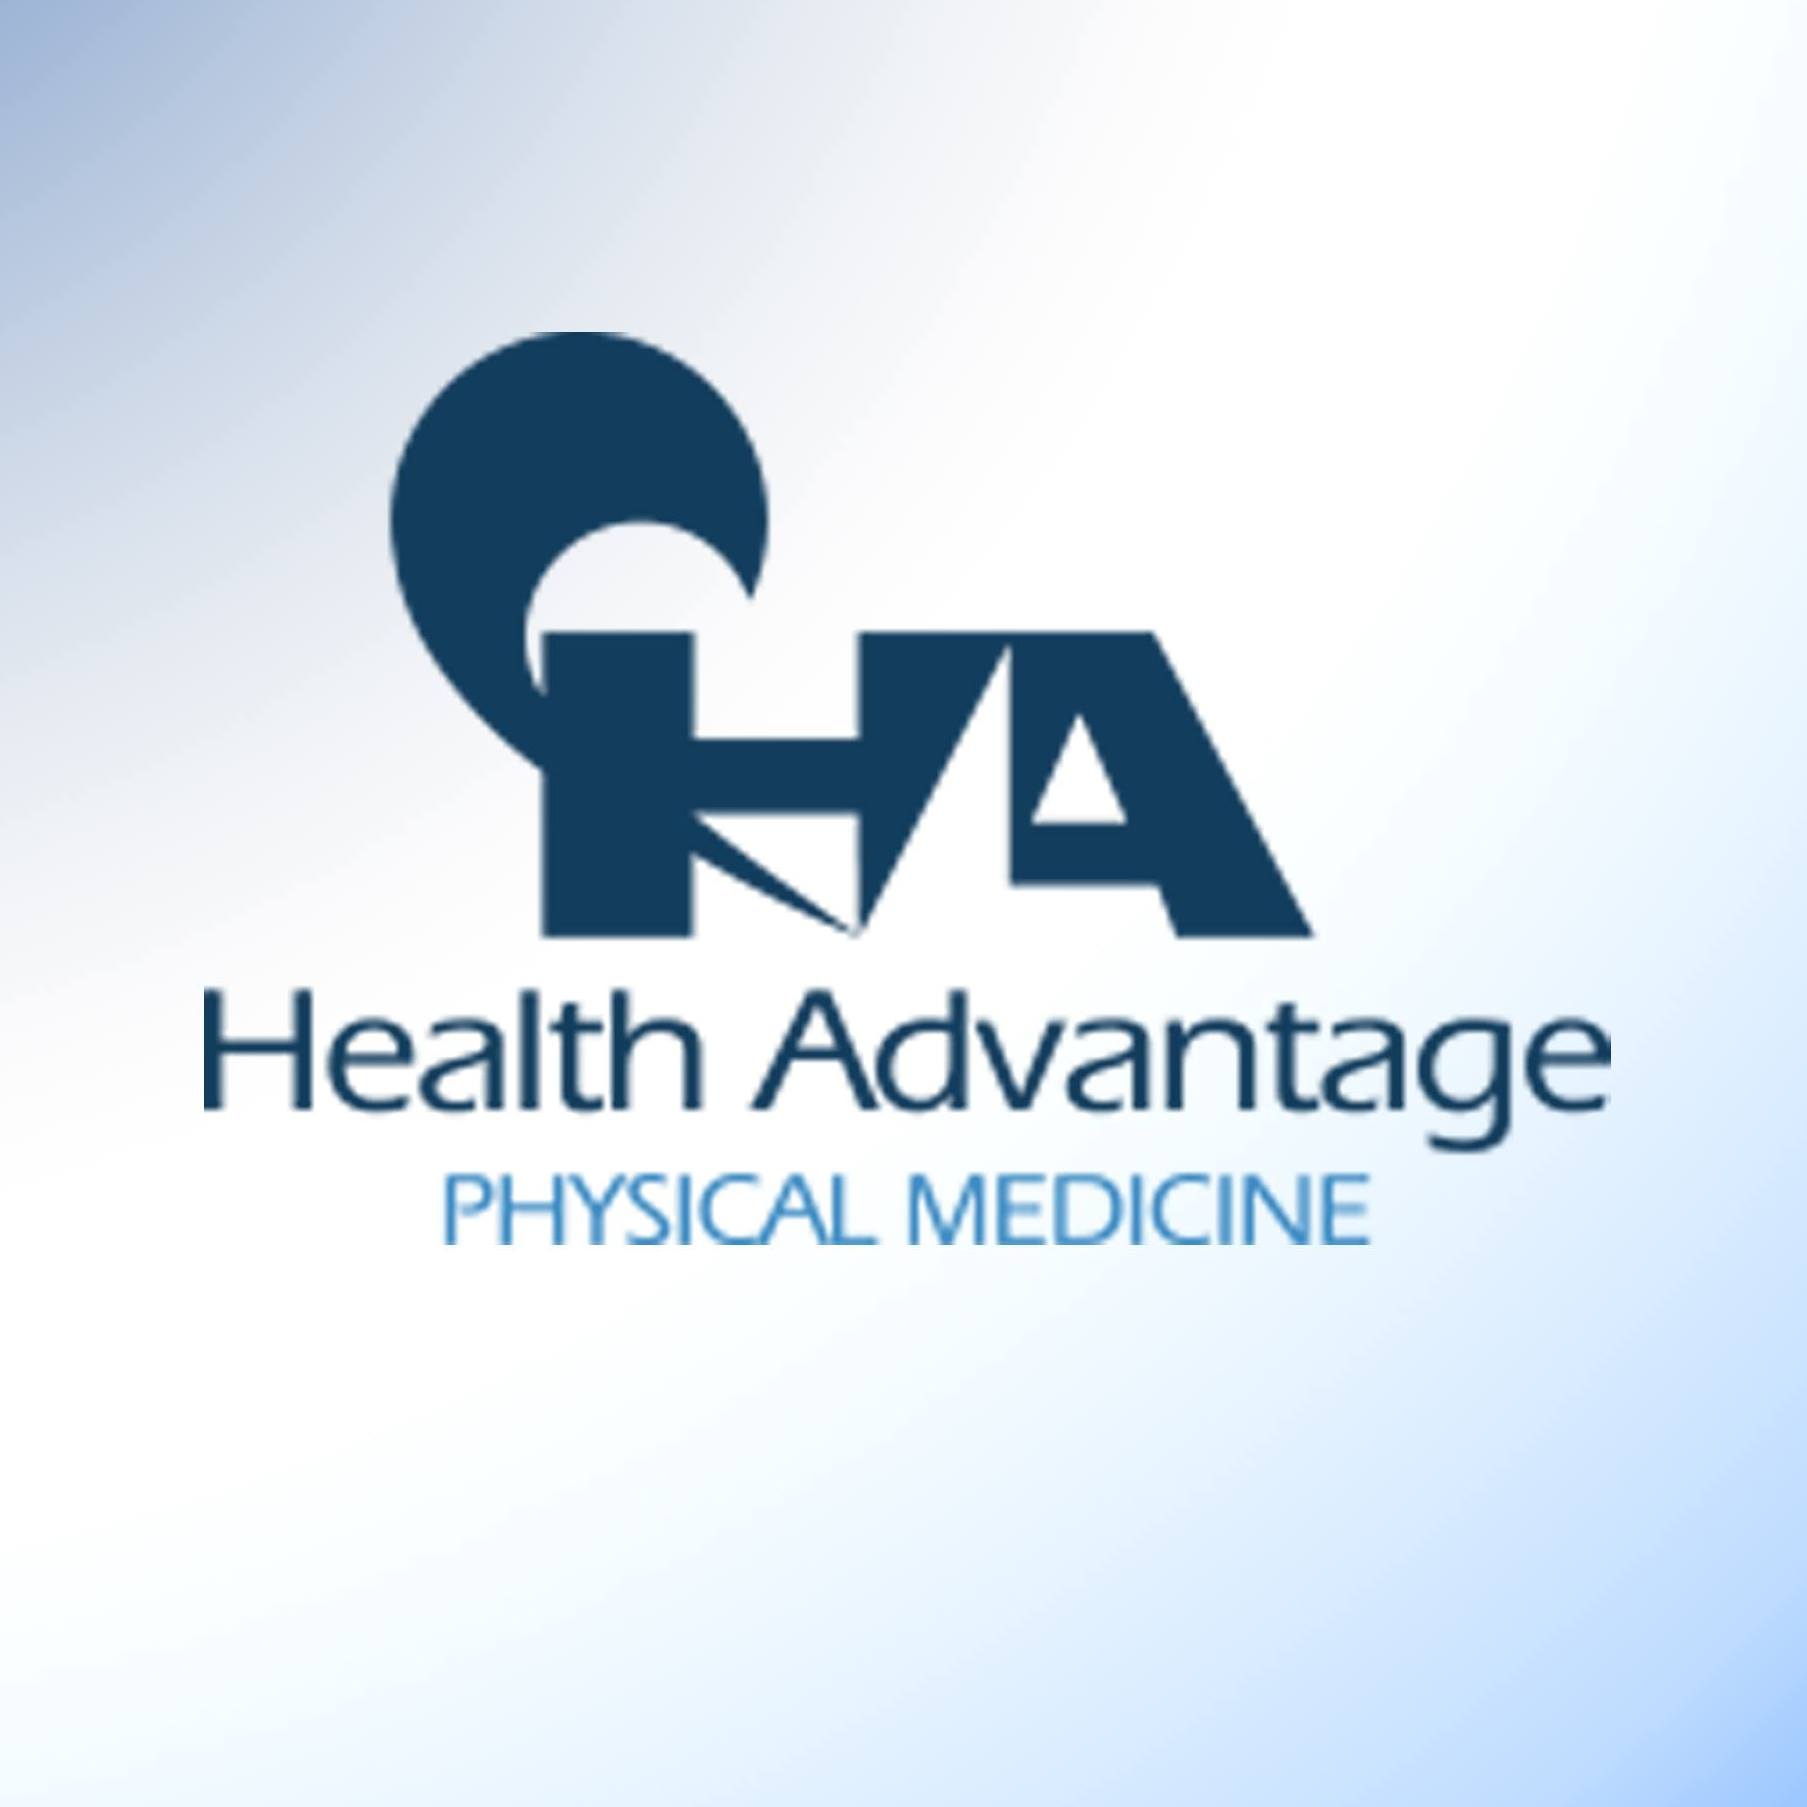 Health Advantage Physical Medicine/ヘルスアドバンテージ・フィジカルメディスンロゴ